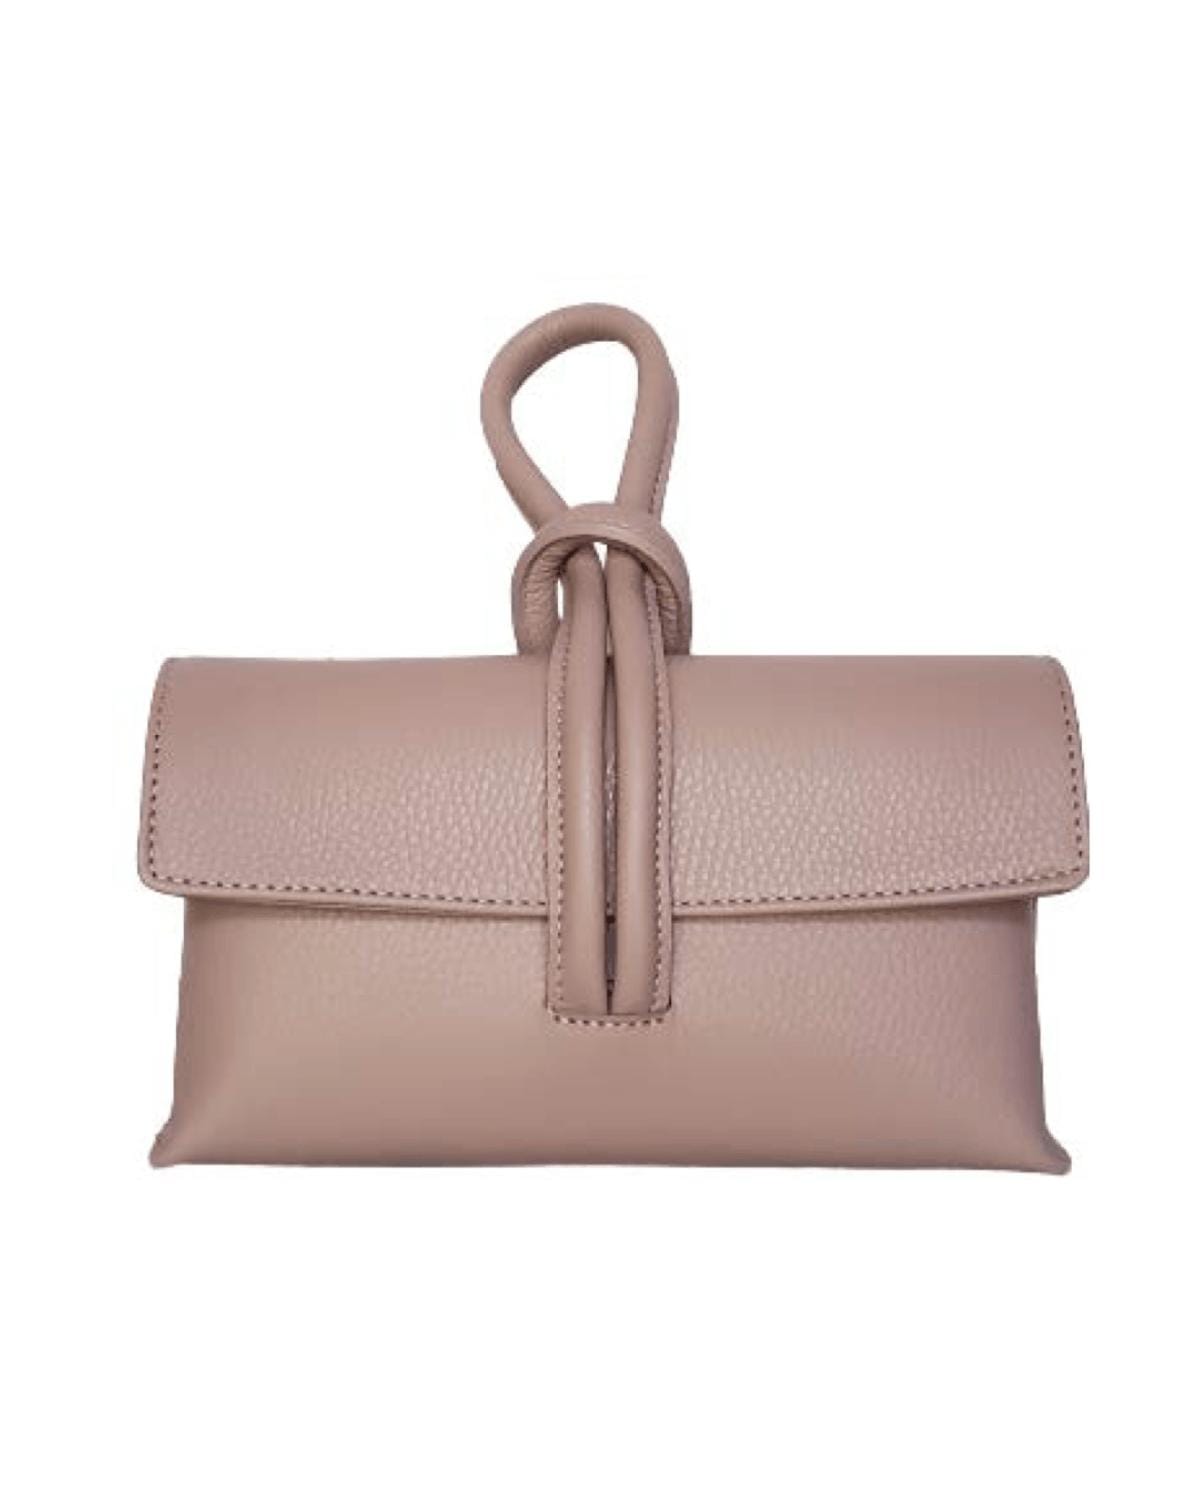 HHB Handbags Blush Nina Italian Leather Small Wrist Bag